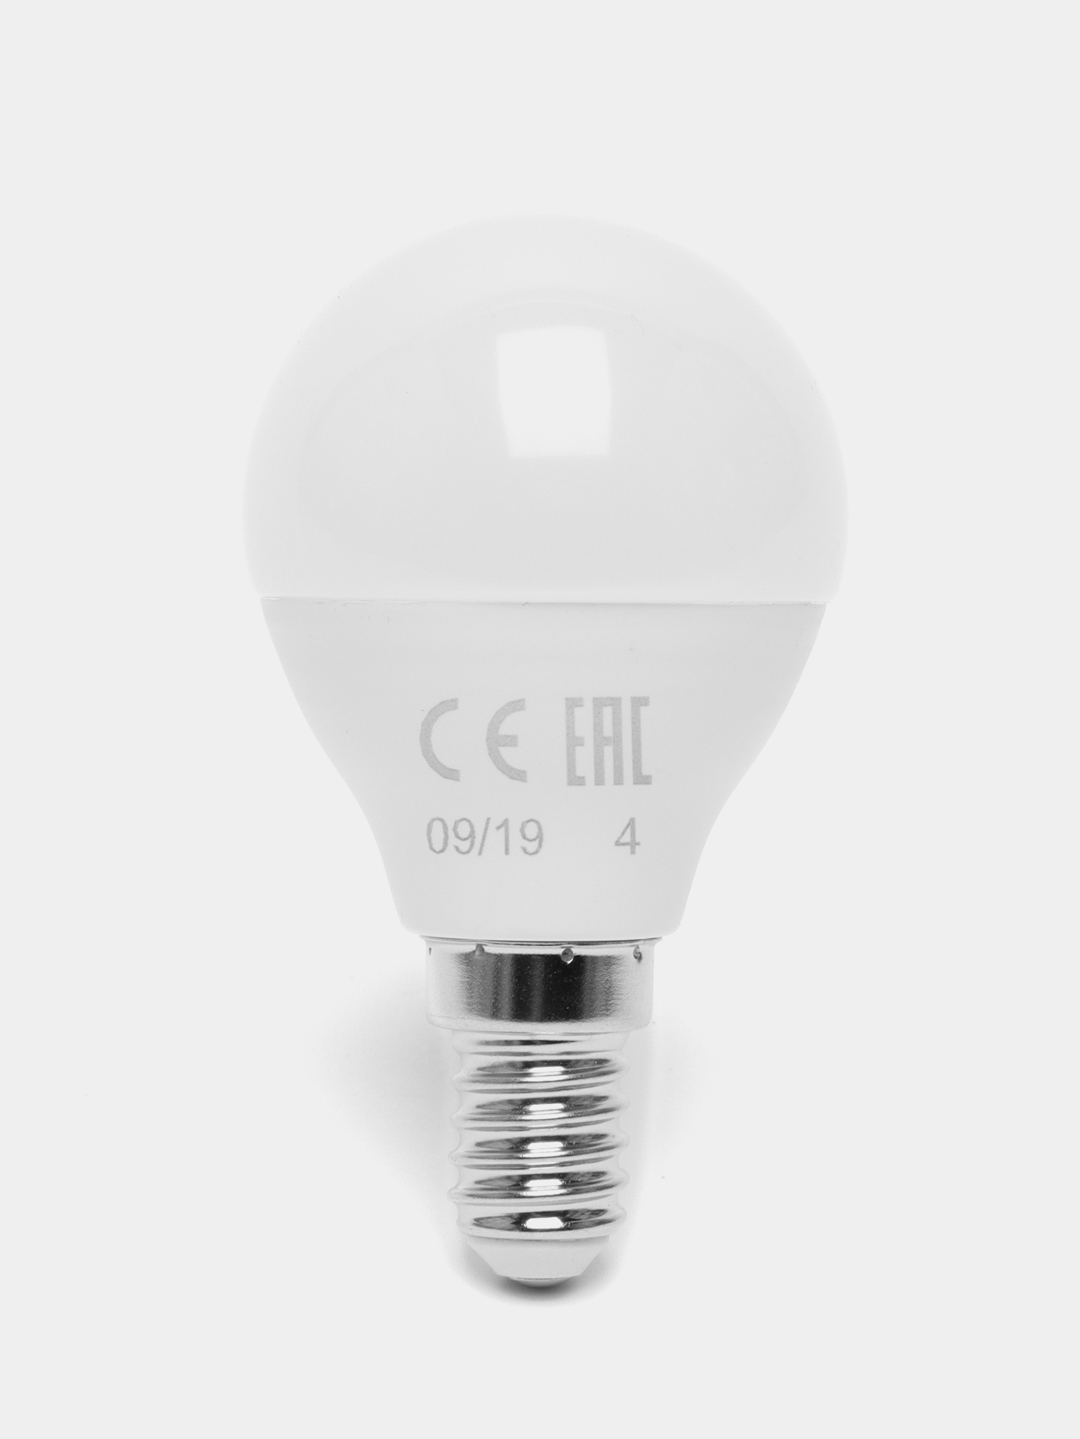 E14 led шар. Цоколь g45. G45 e14 шар. Цоколь е14 самые мощные лампочки. Какая гарантия на лампочки энергосберегающие.